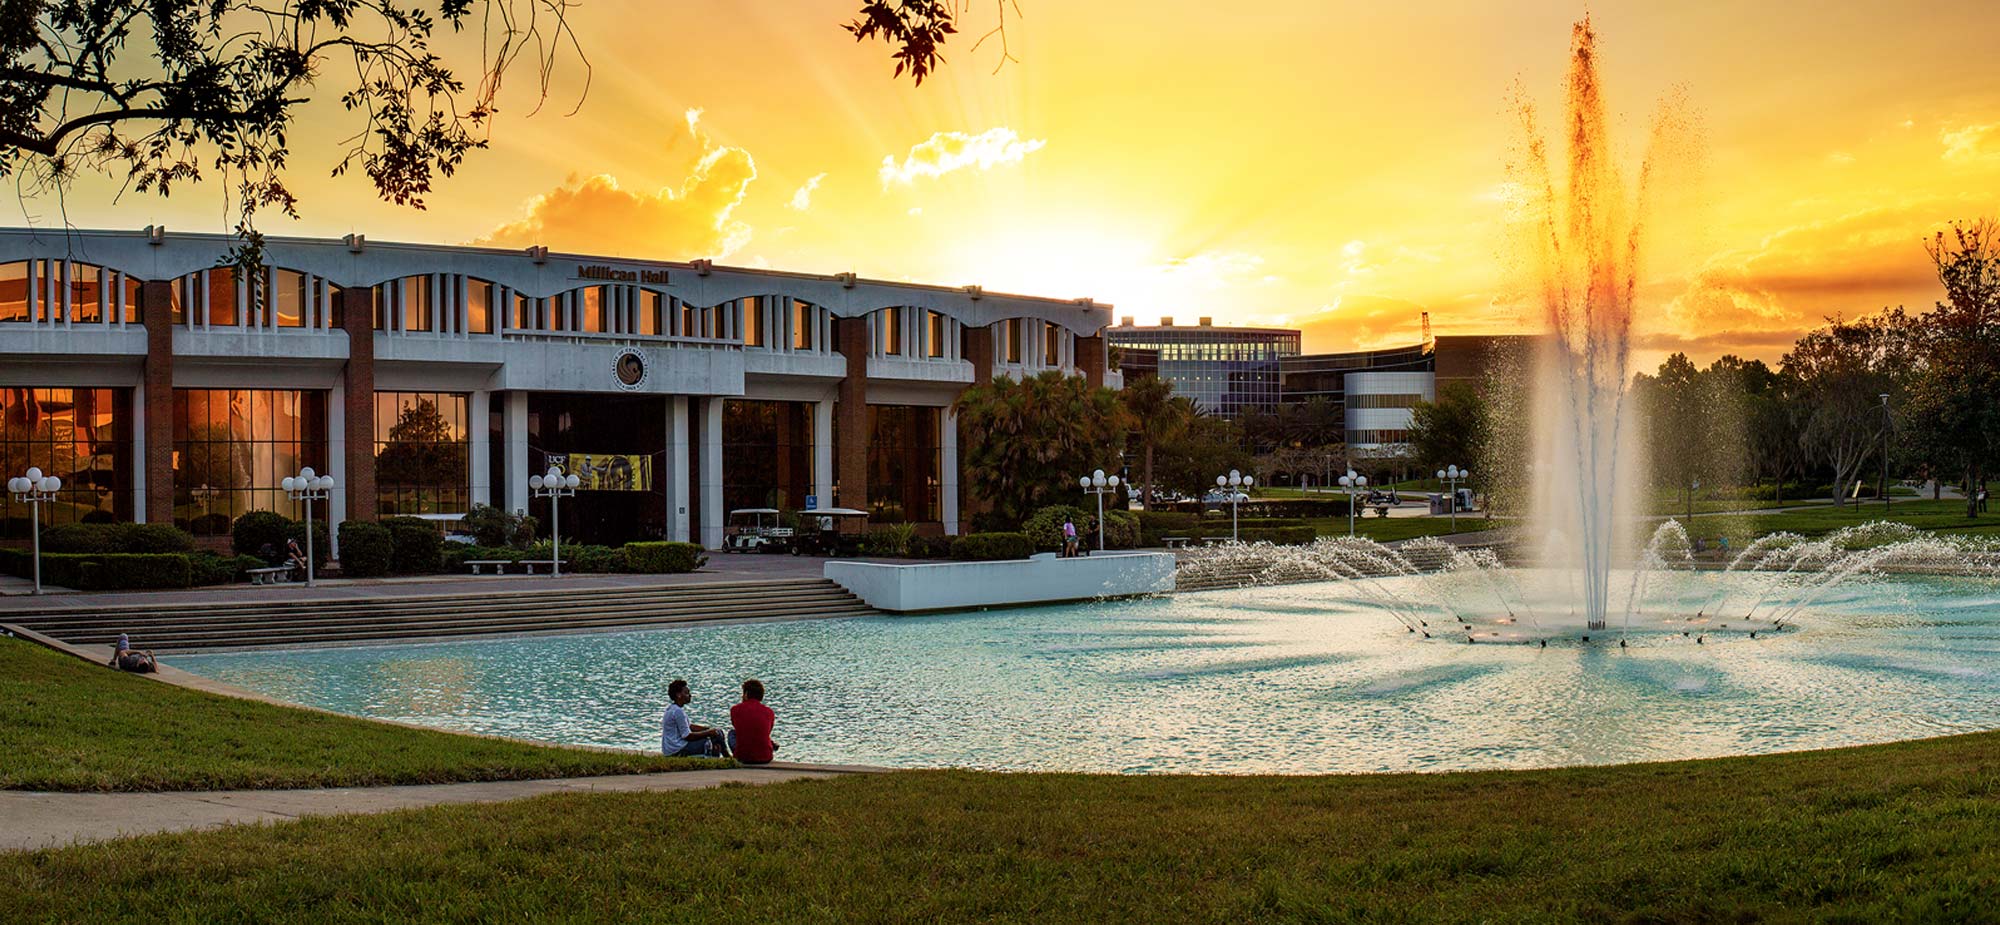 Universitiy of Central Florida campus